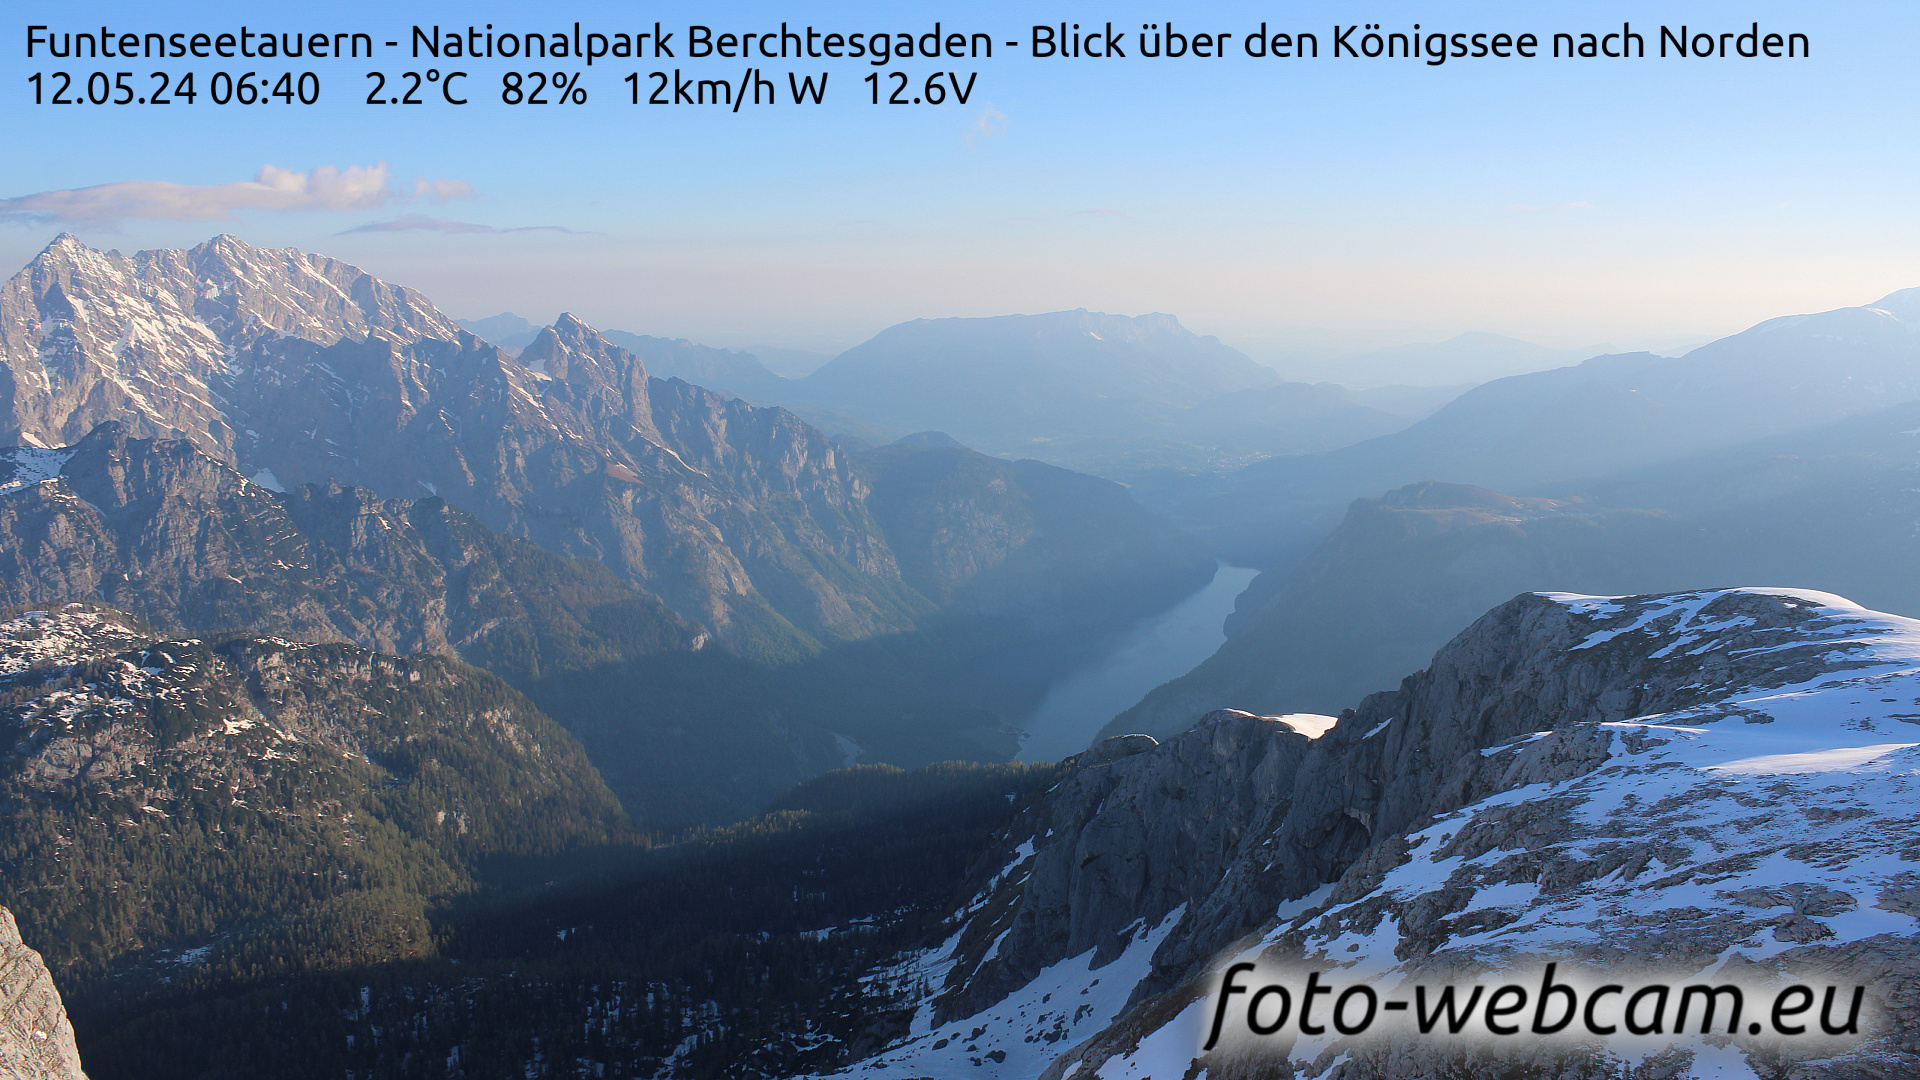 Berchtesgaden Me. 06:48